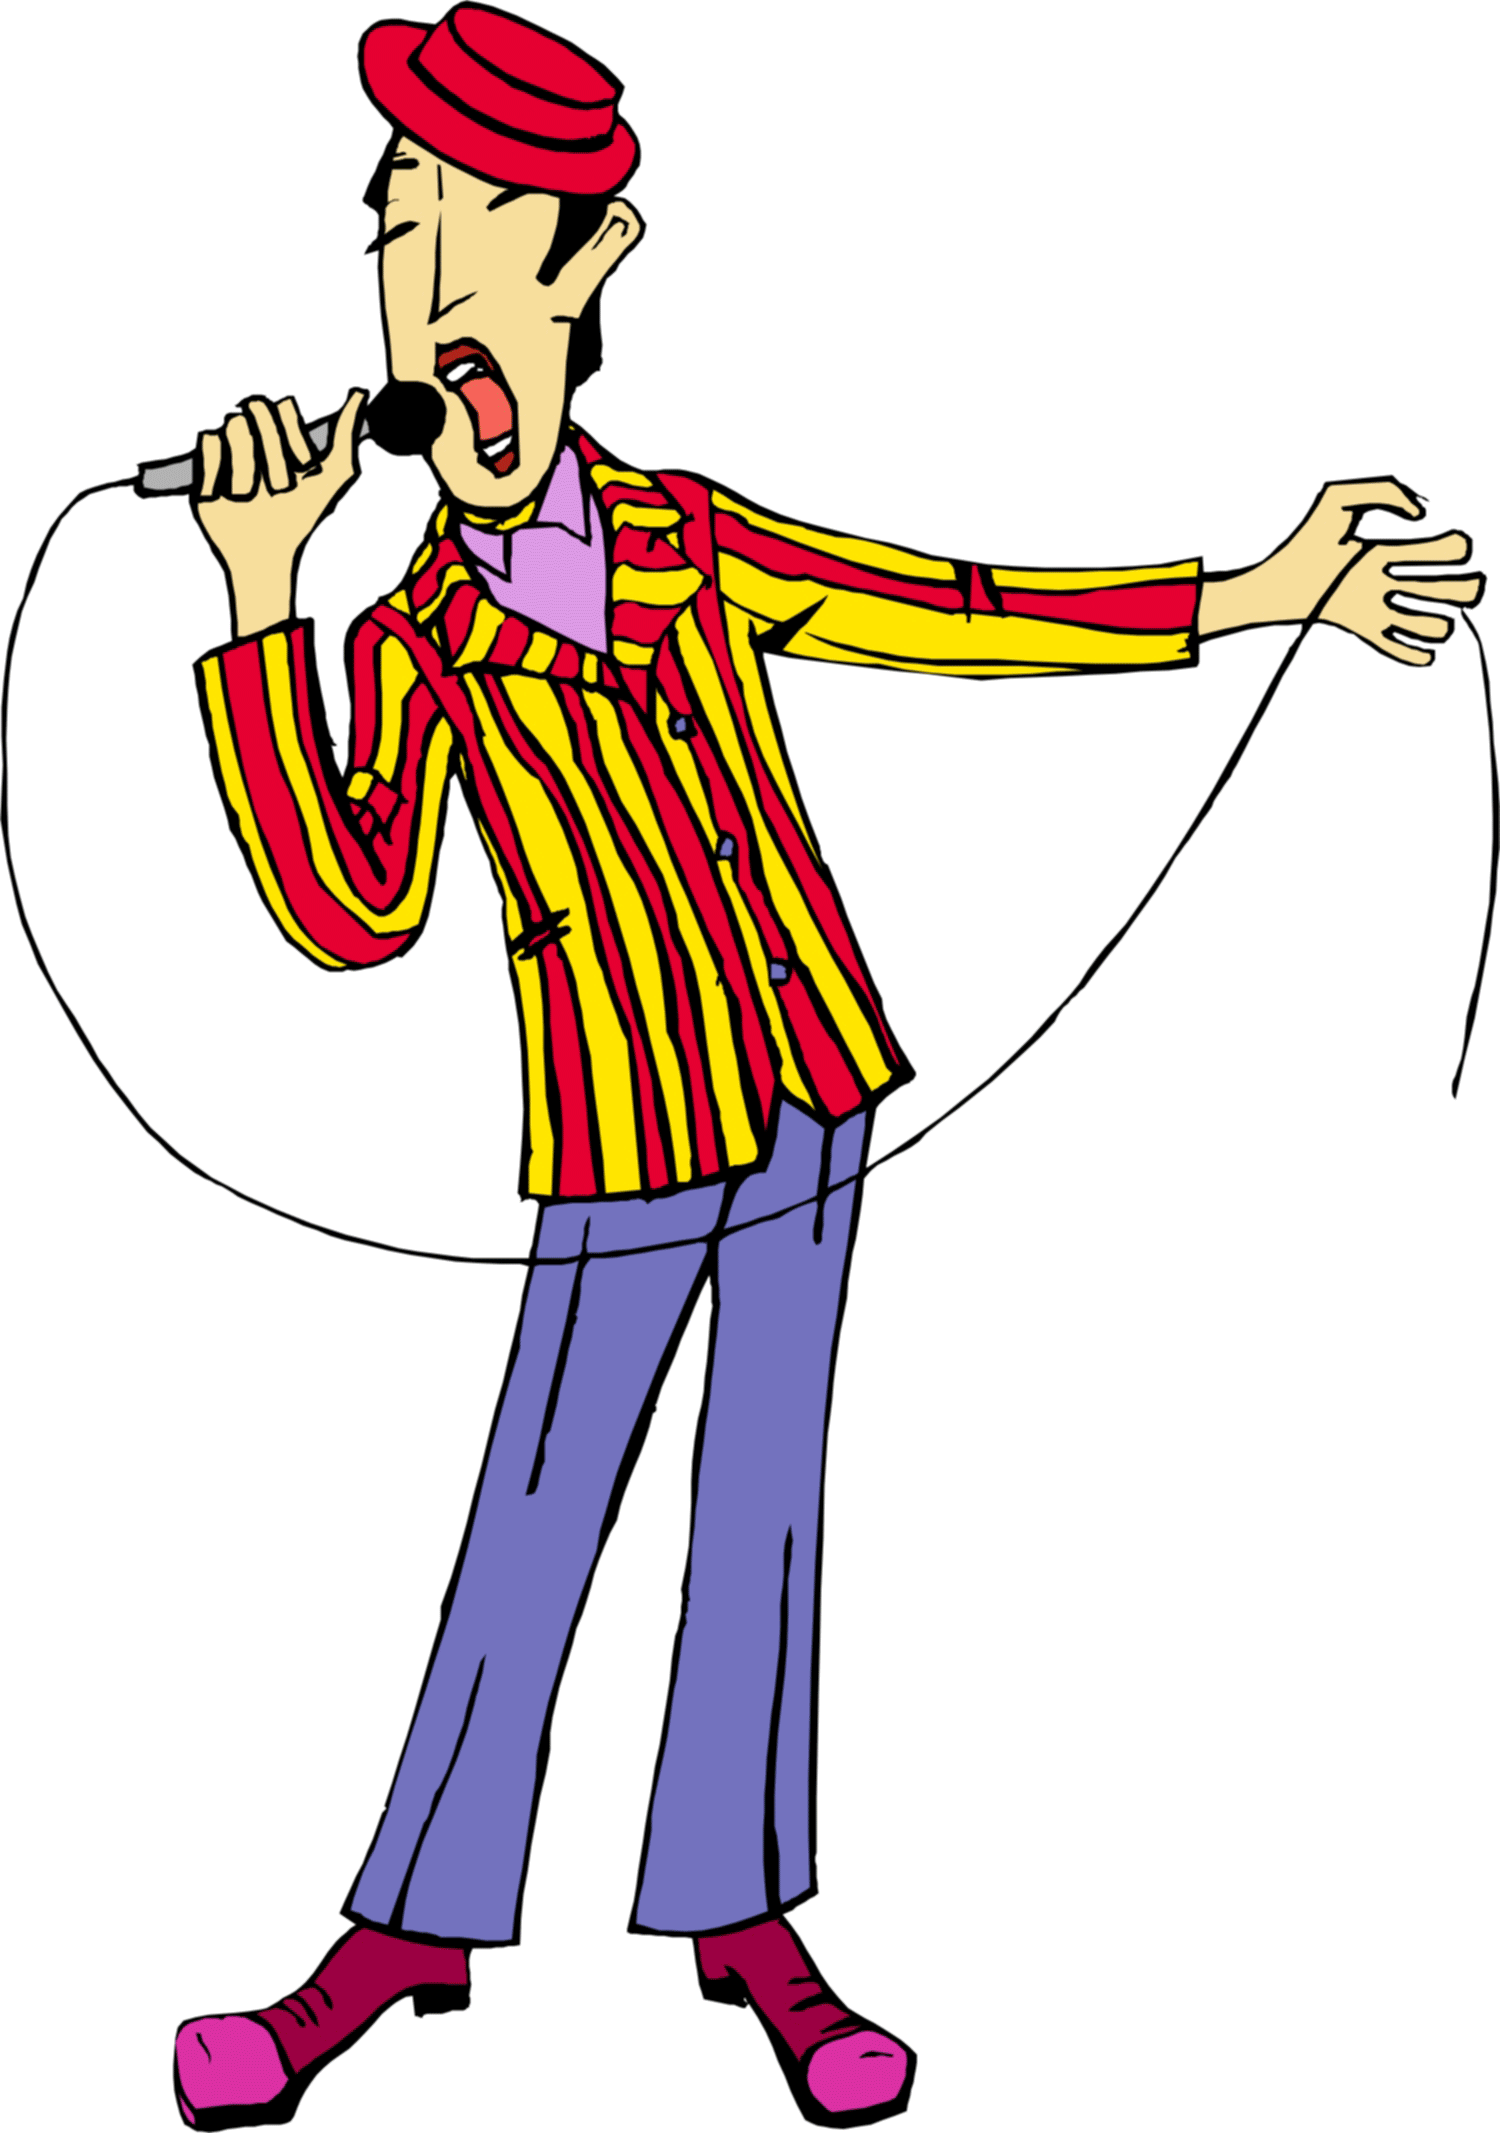 Animated clipart singing. Catalogue rockstar singer